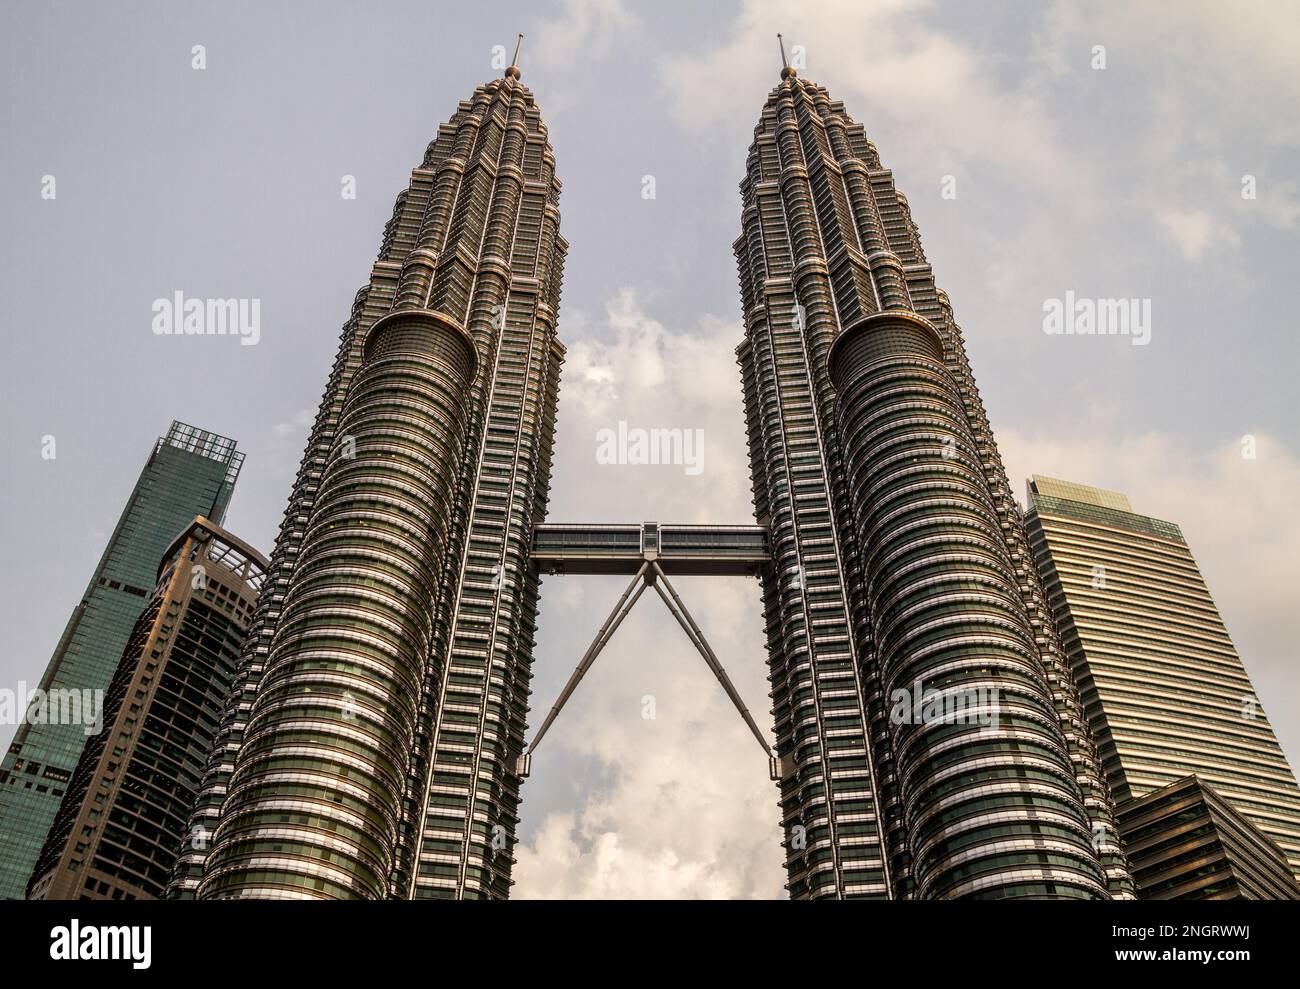 Petronas Towers, famosi grattacieli gemelli a Kuala Lumpur, Malesia. Foto Stock